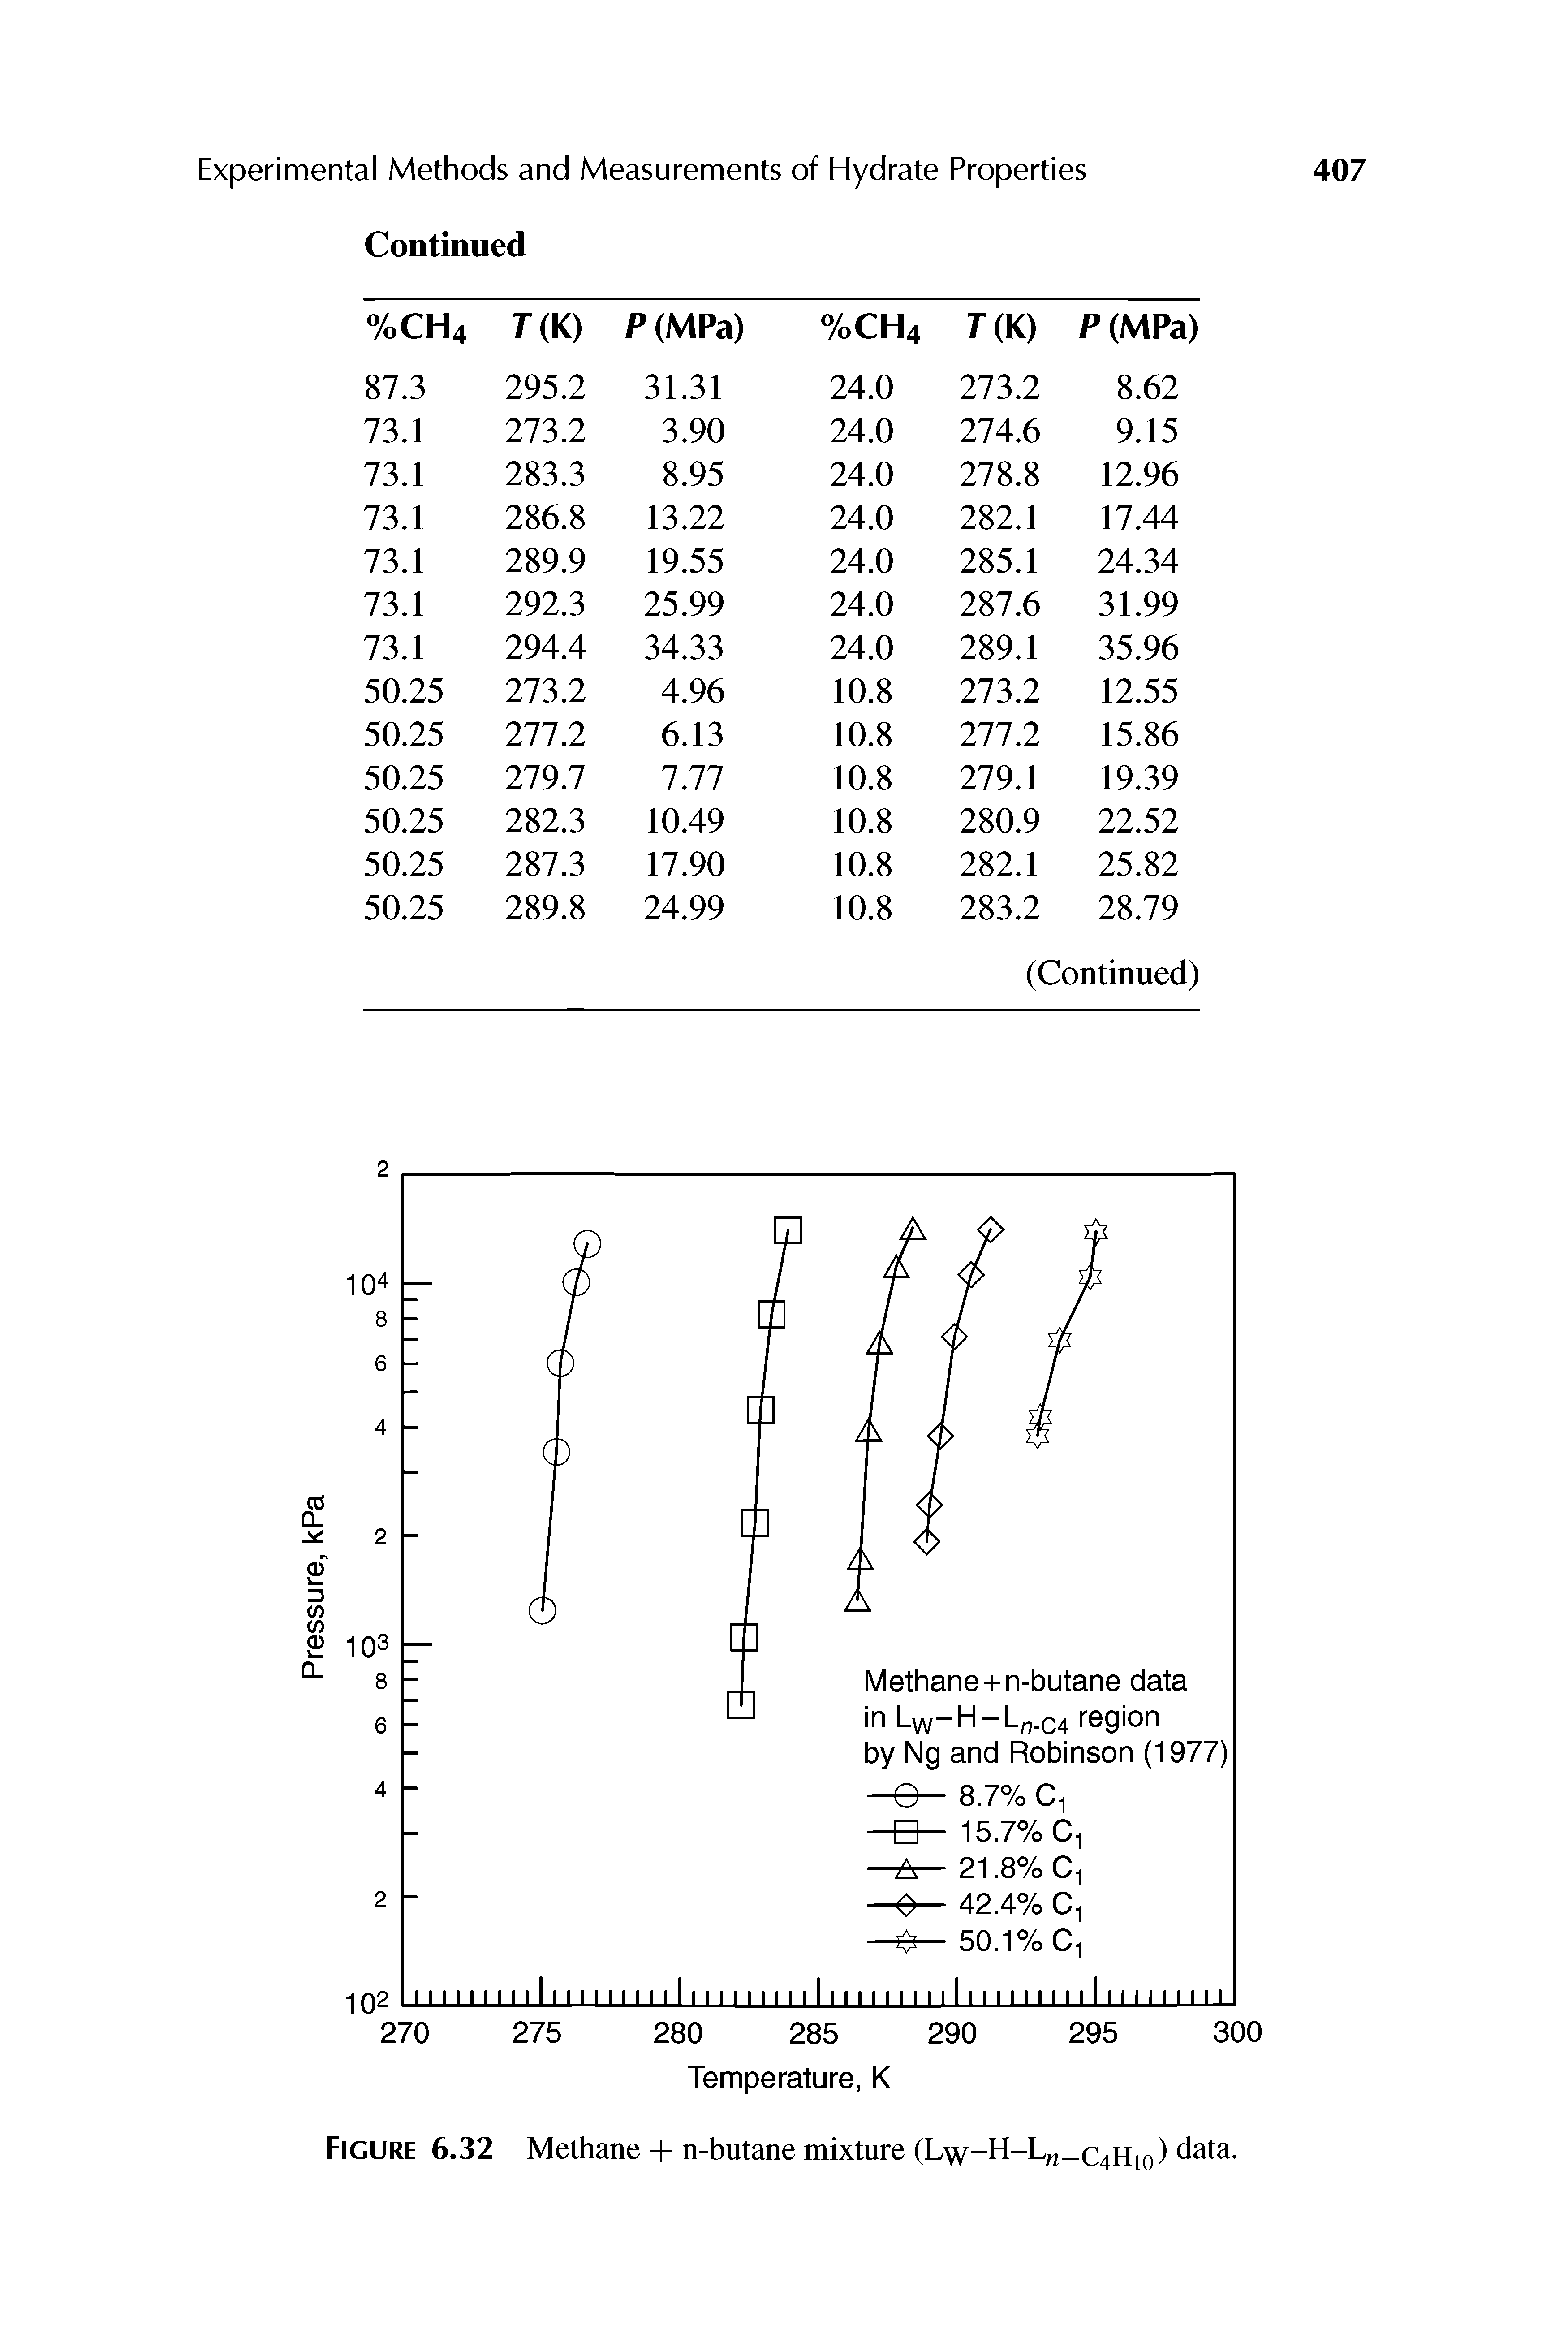 Figure 6.32 Methane + n-butane mixture (Lw-H-Lw qhio) data.